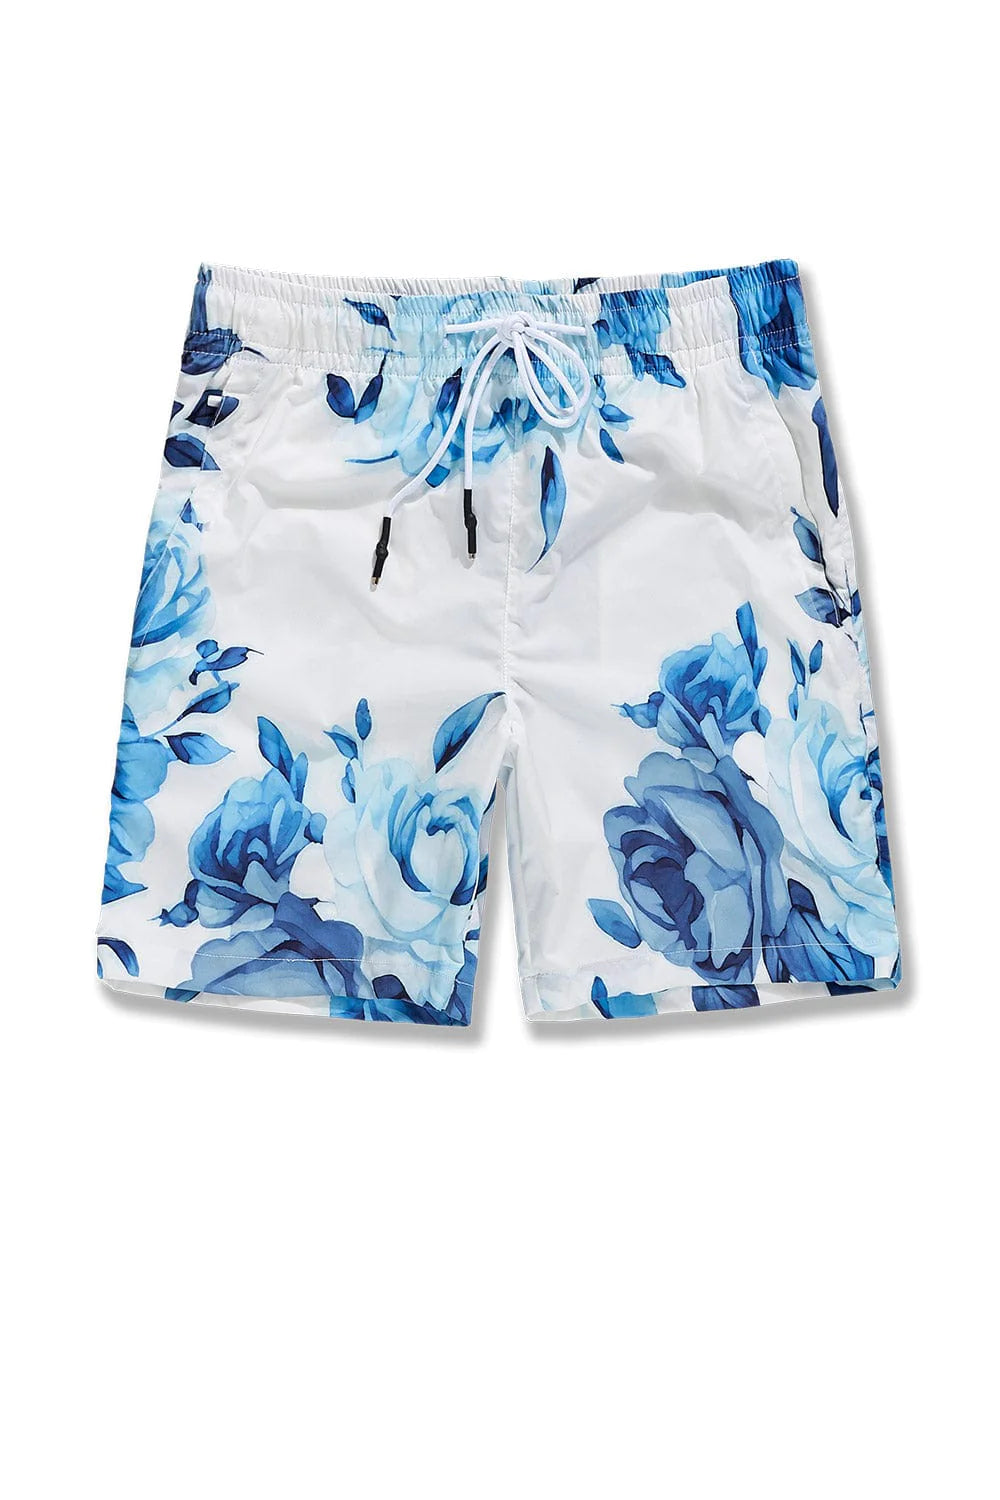 “NEW” Jordan Craig Retro Lounge Shorts (Blue Floral)